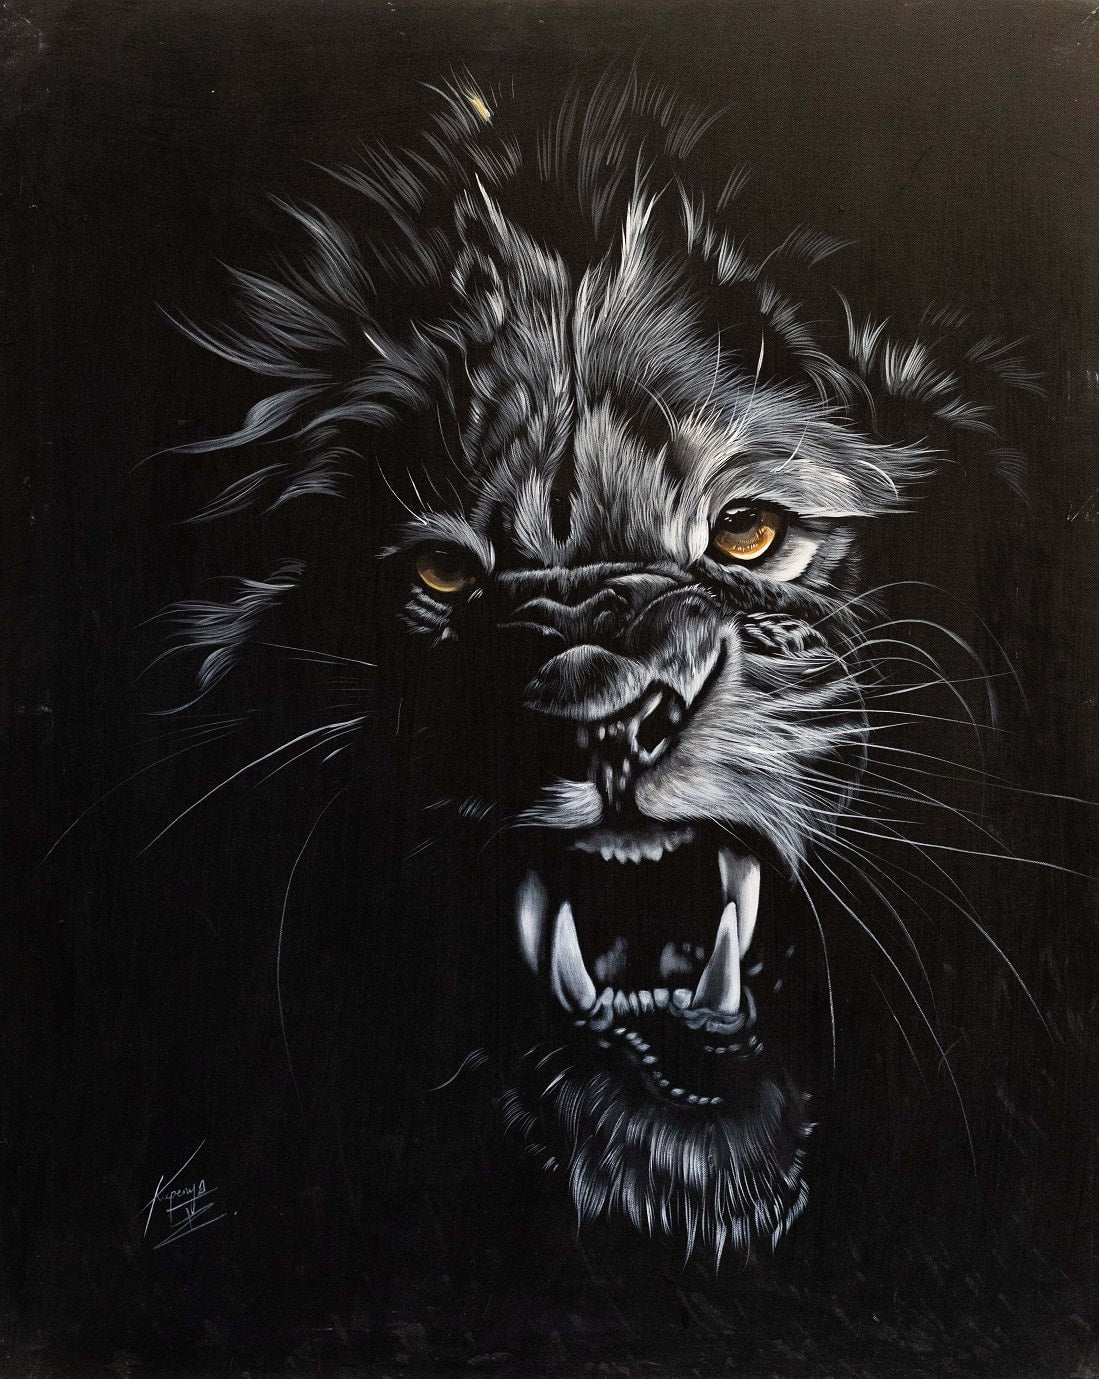 Handmade Painting 'Roaring Lion'